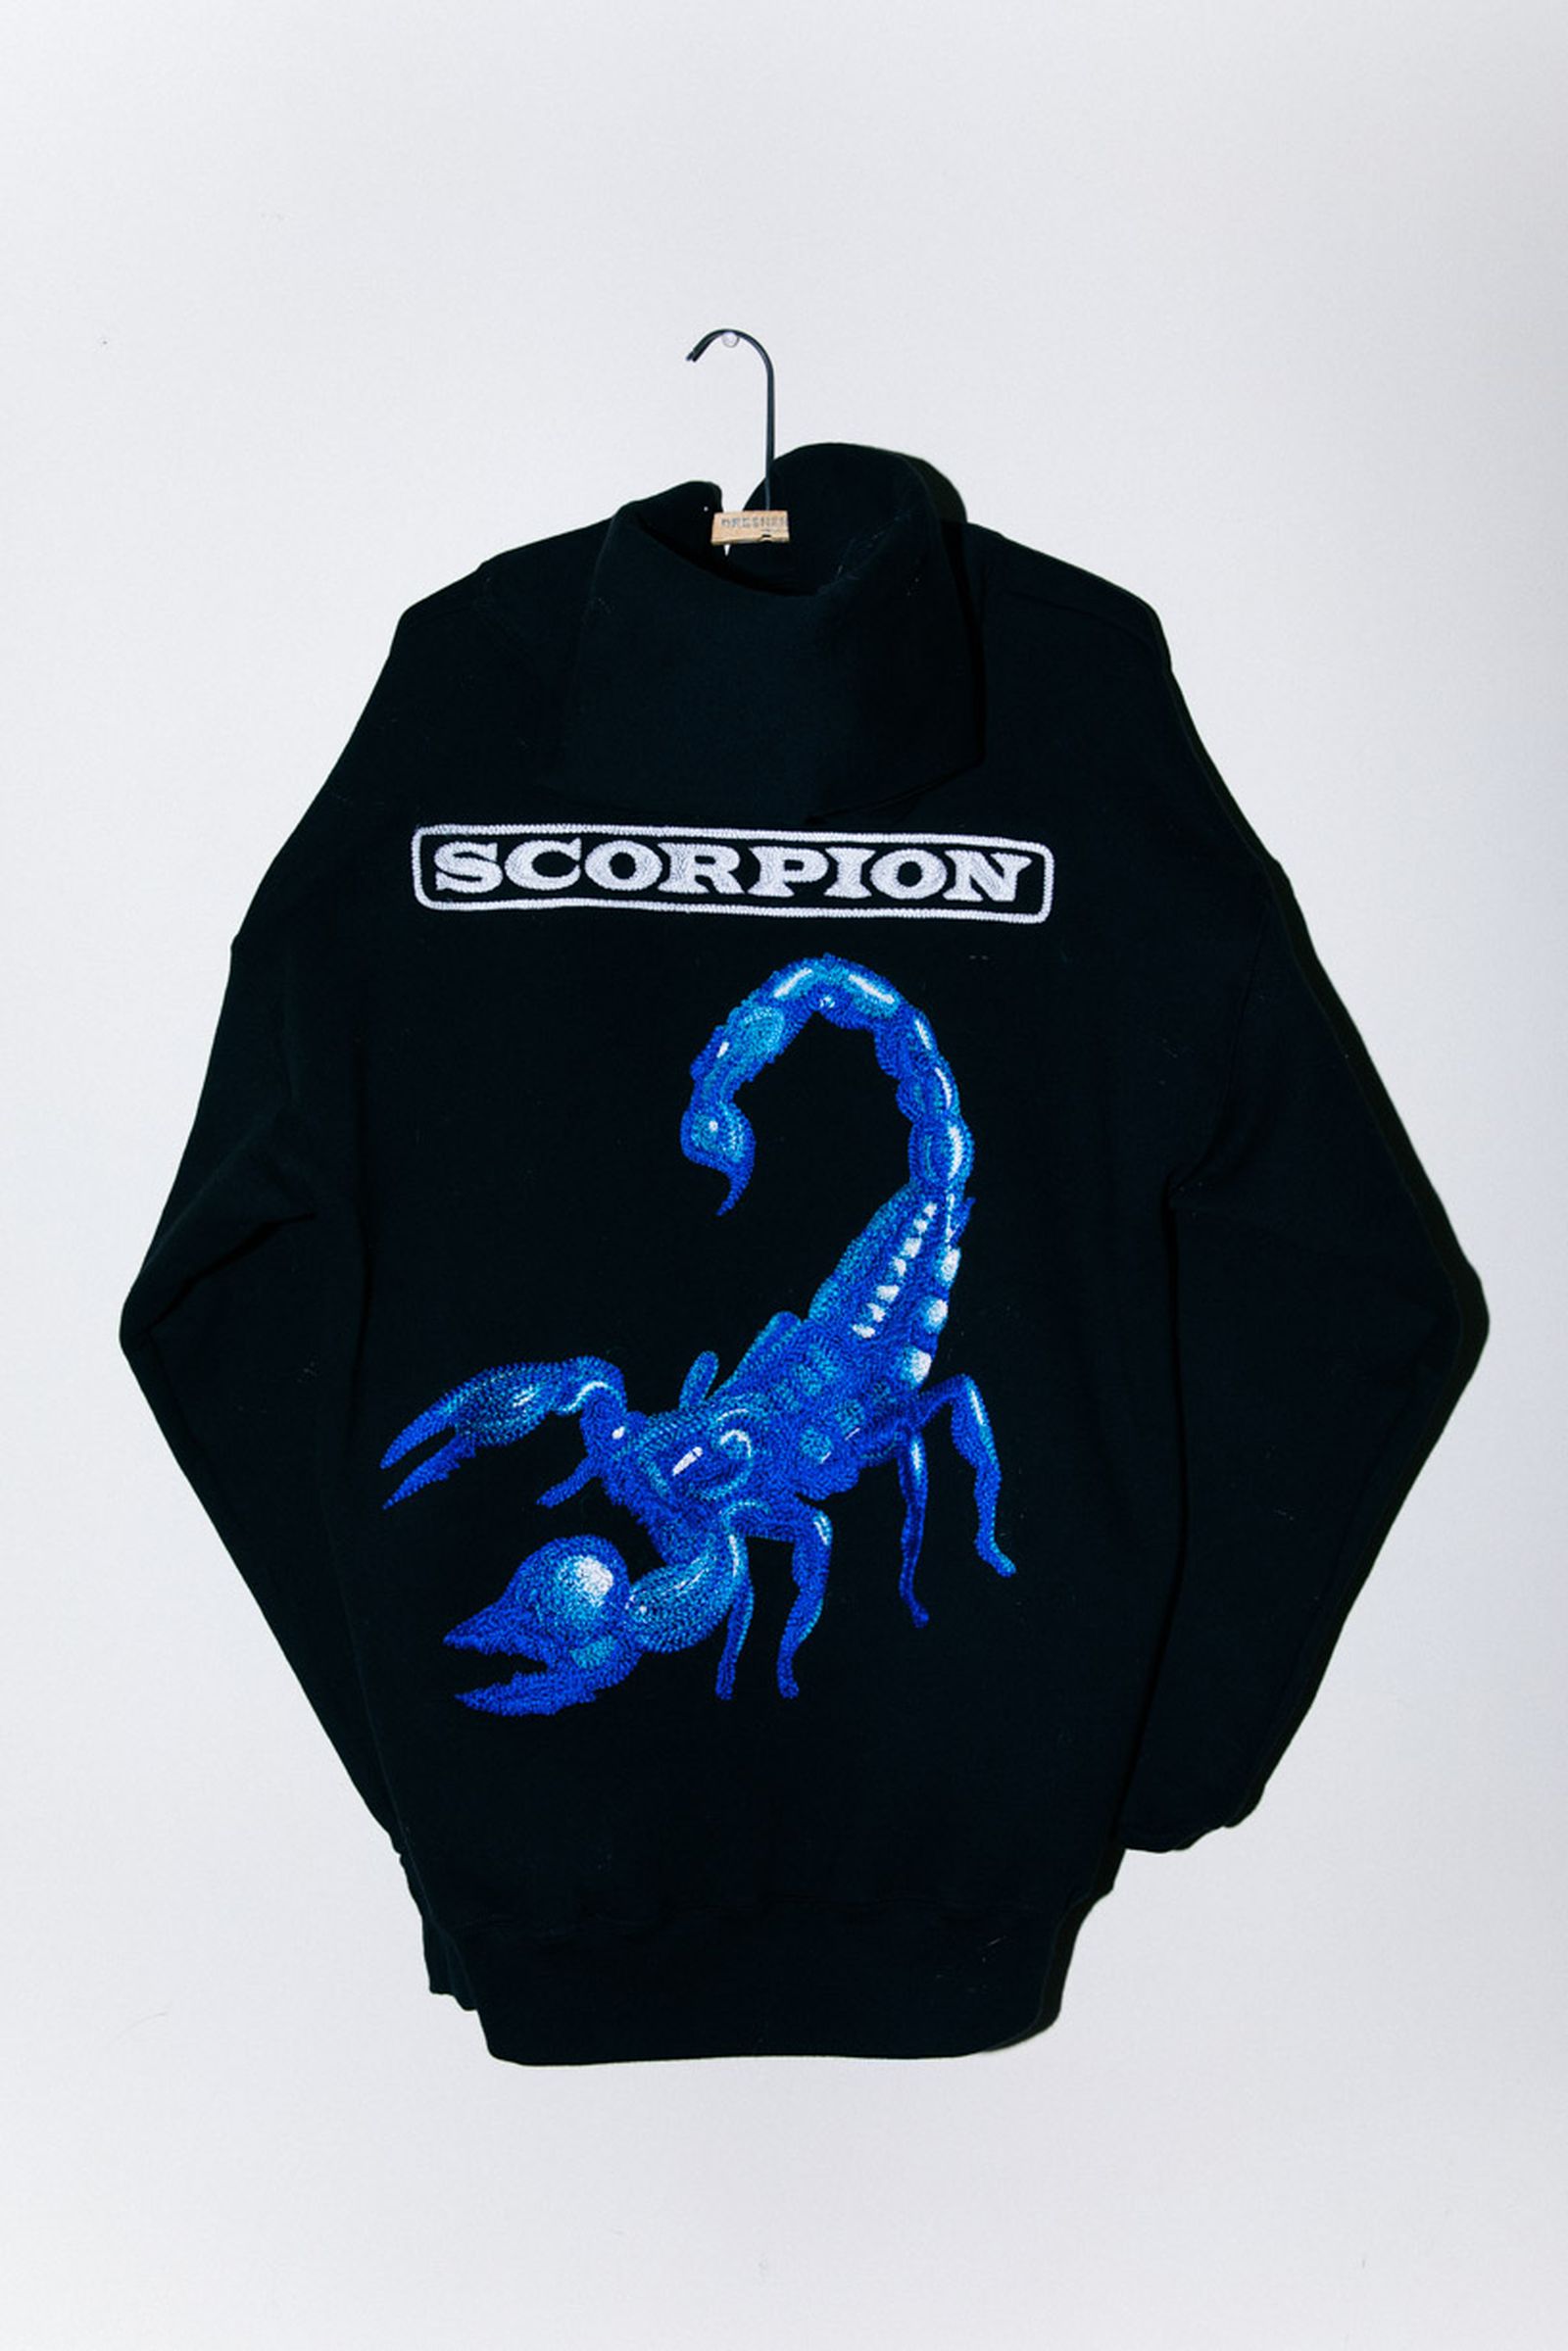 matt-doodookaka-drake-scorpion-39